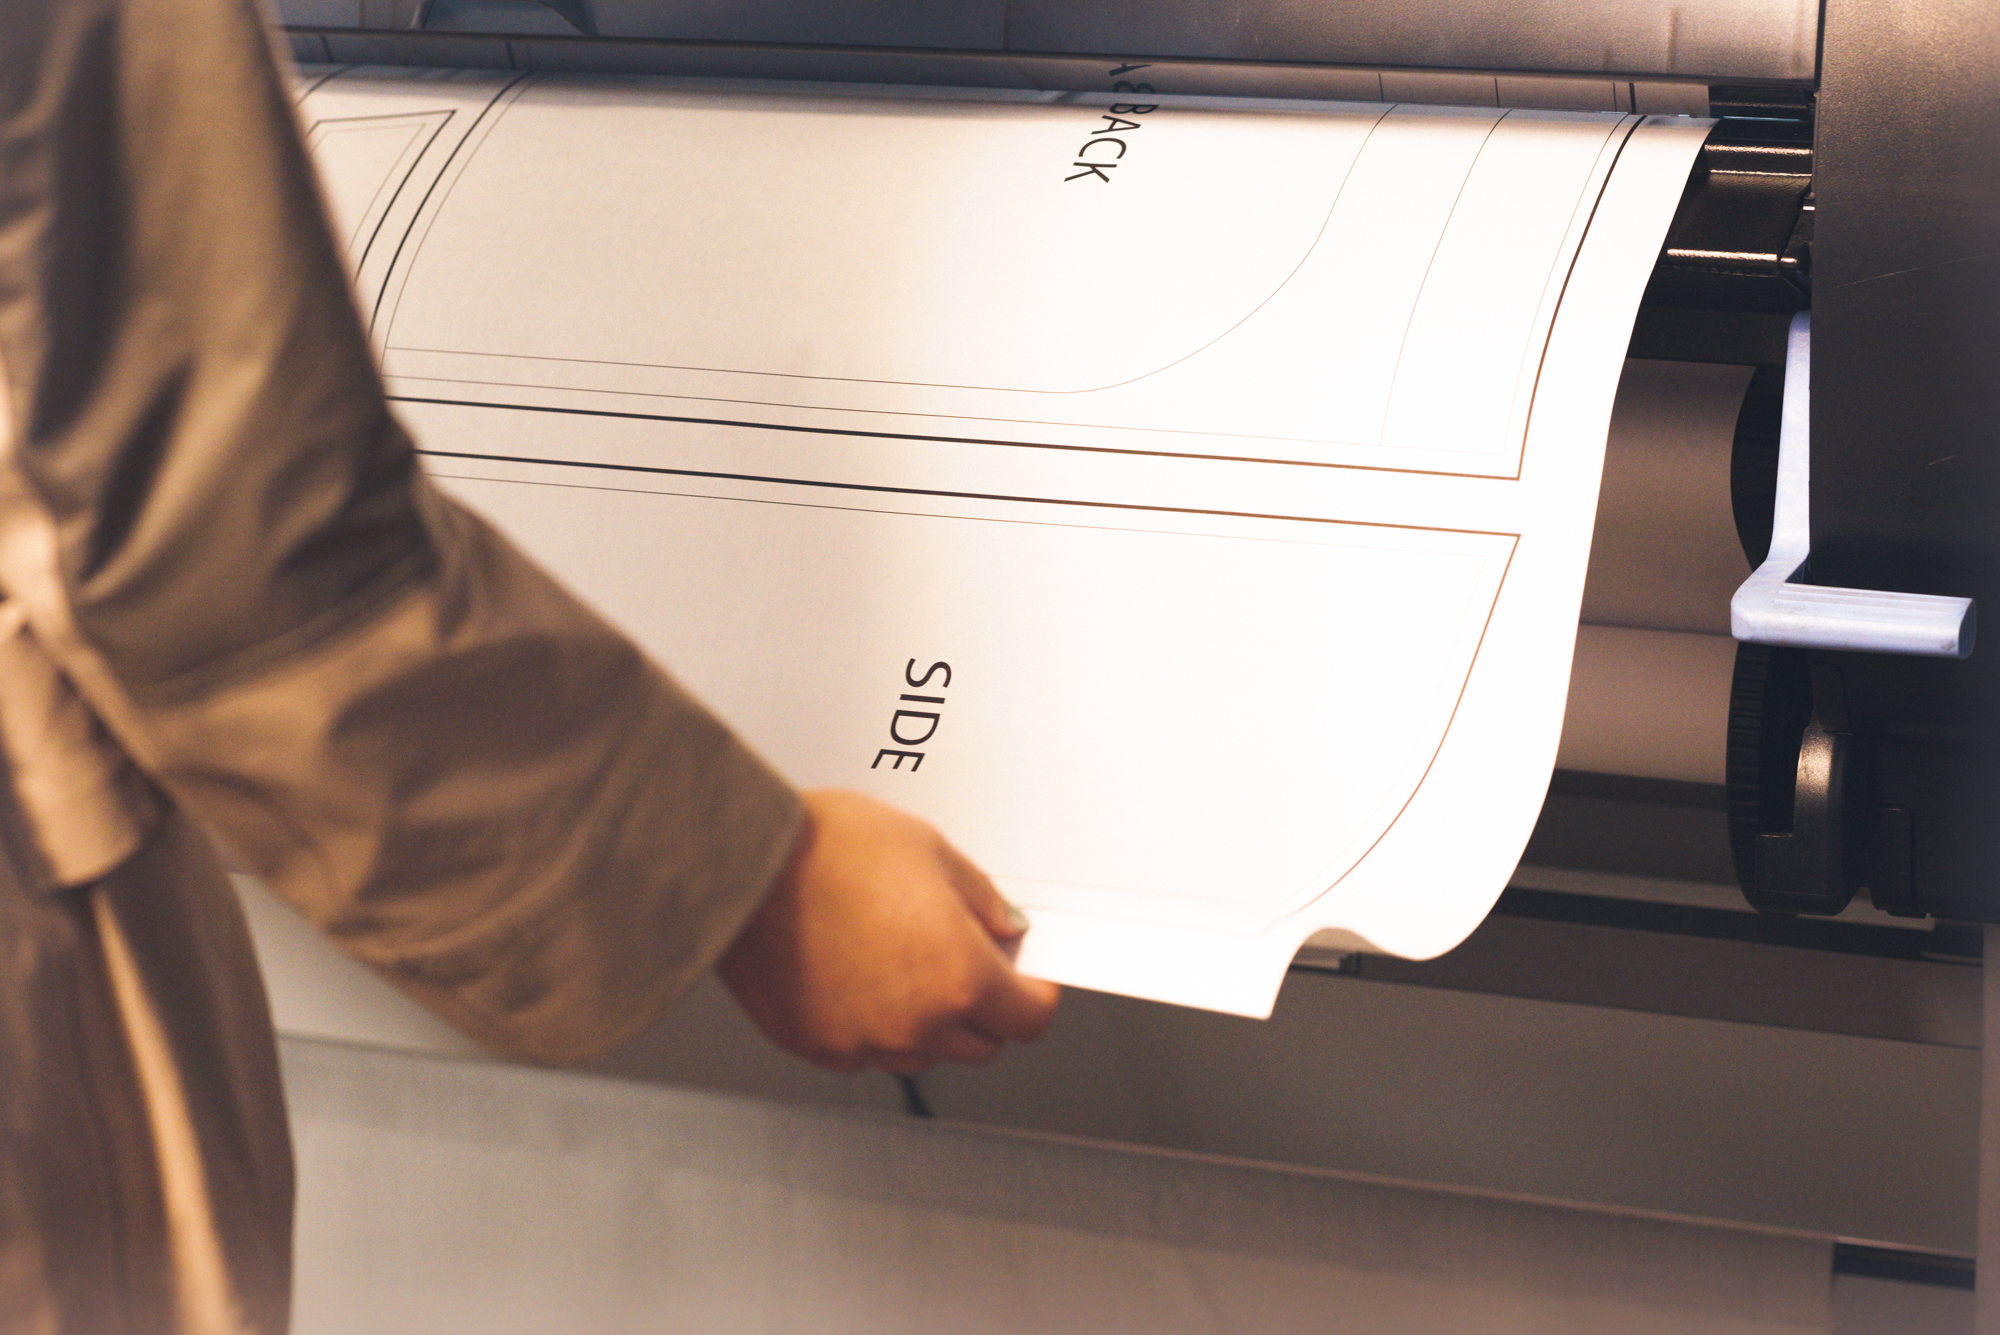 Student printing work on oversize printer